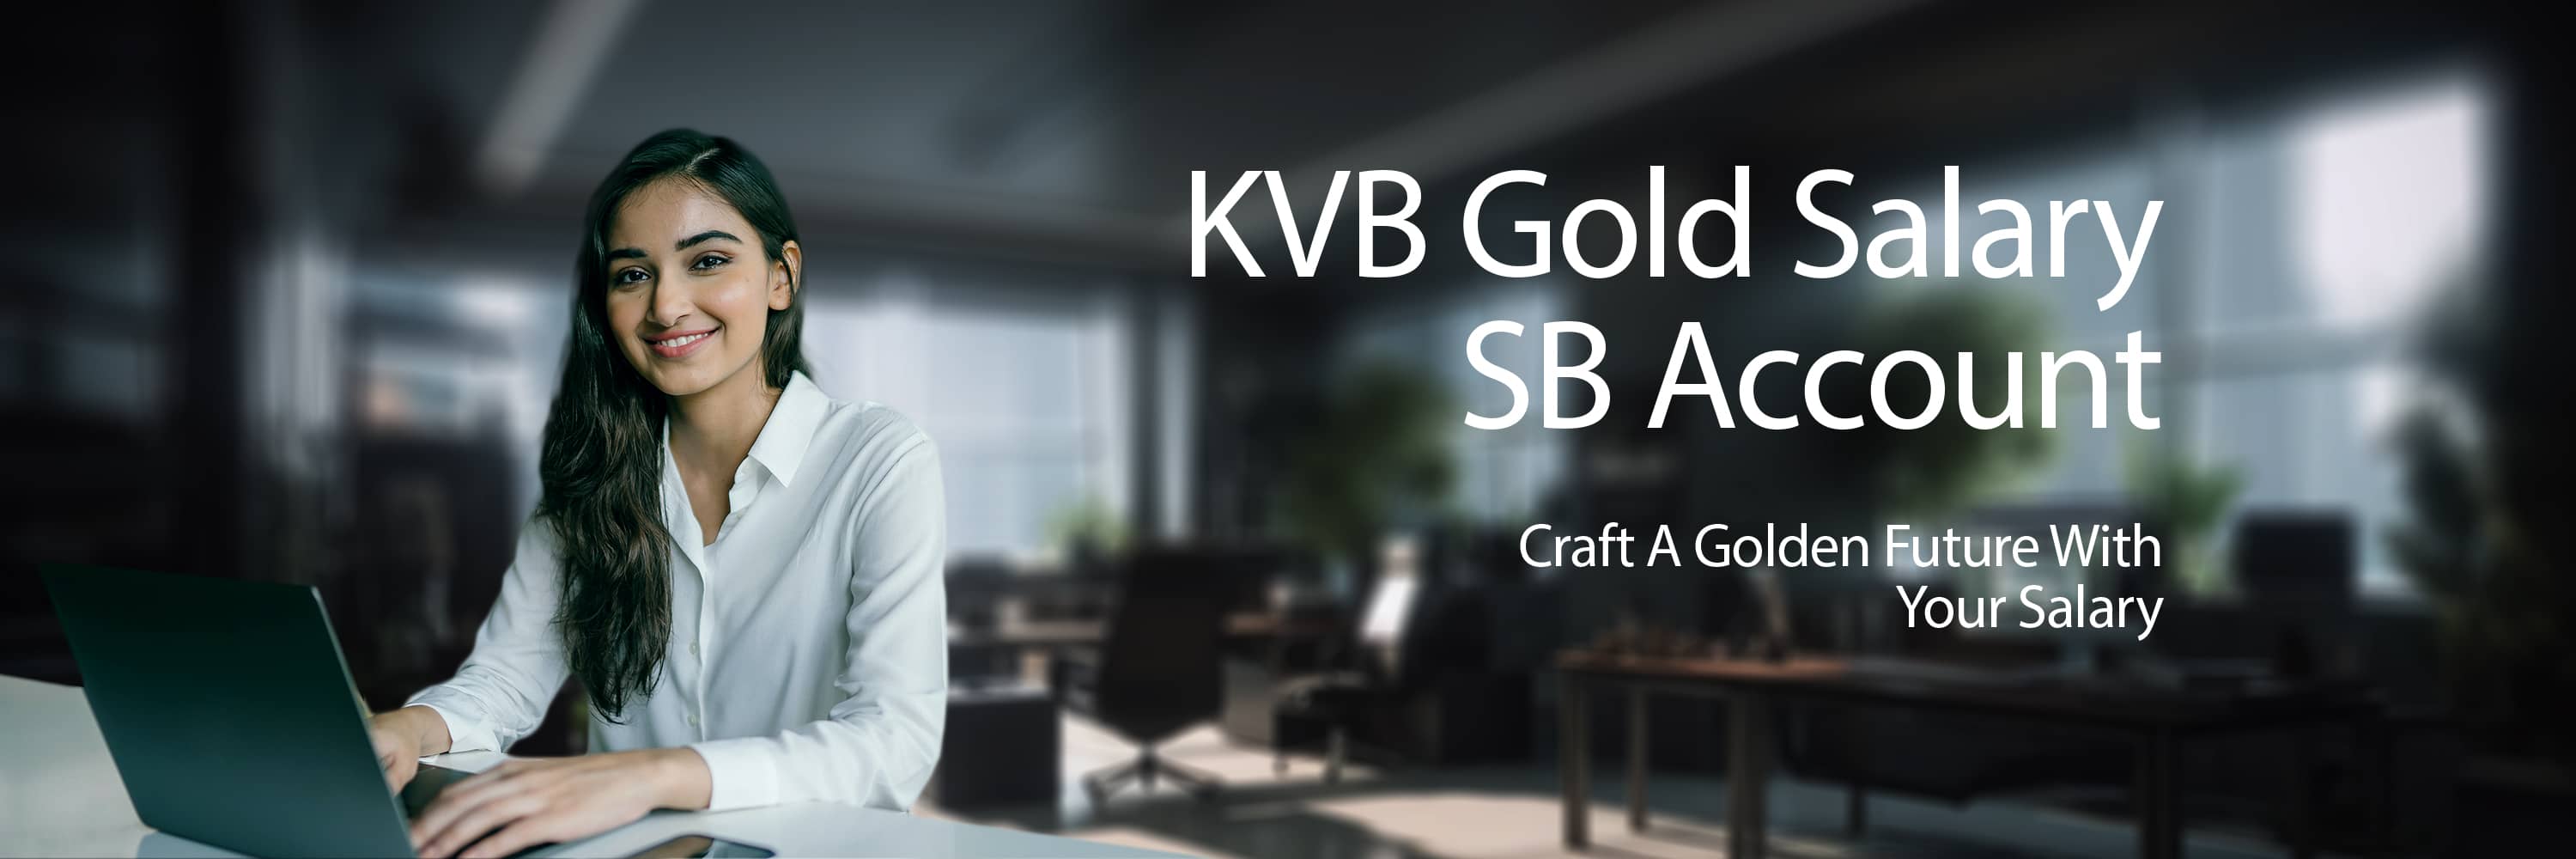 KVB Gold Salary SB Account